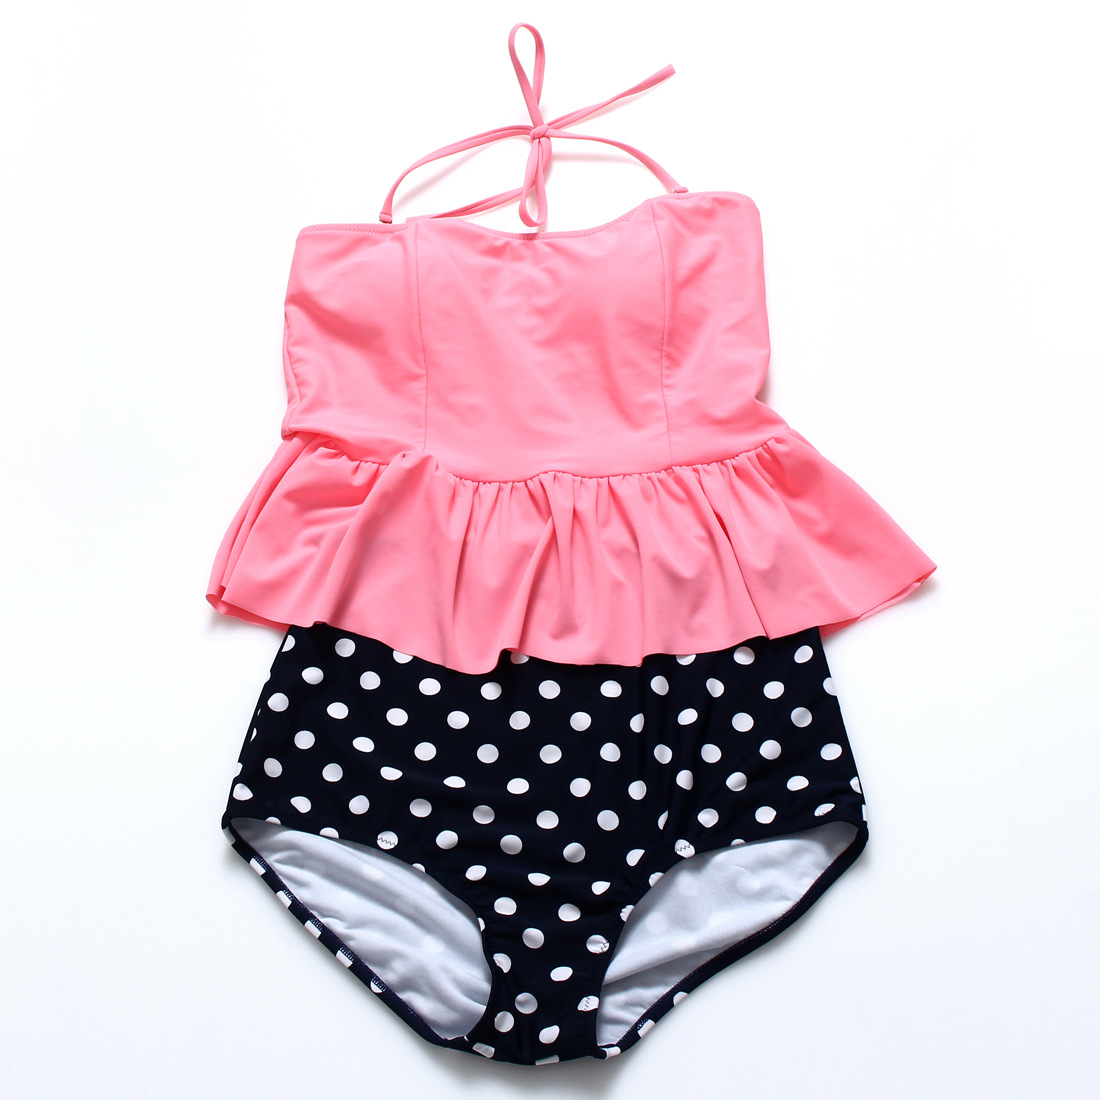 Cute Dot High Waist Bikini Set - Pink & Black